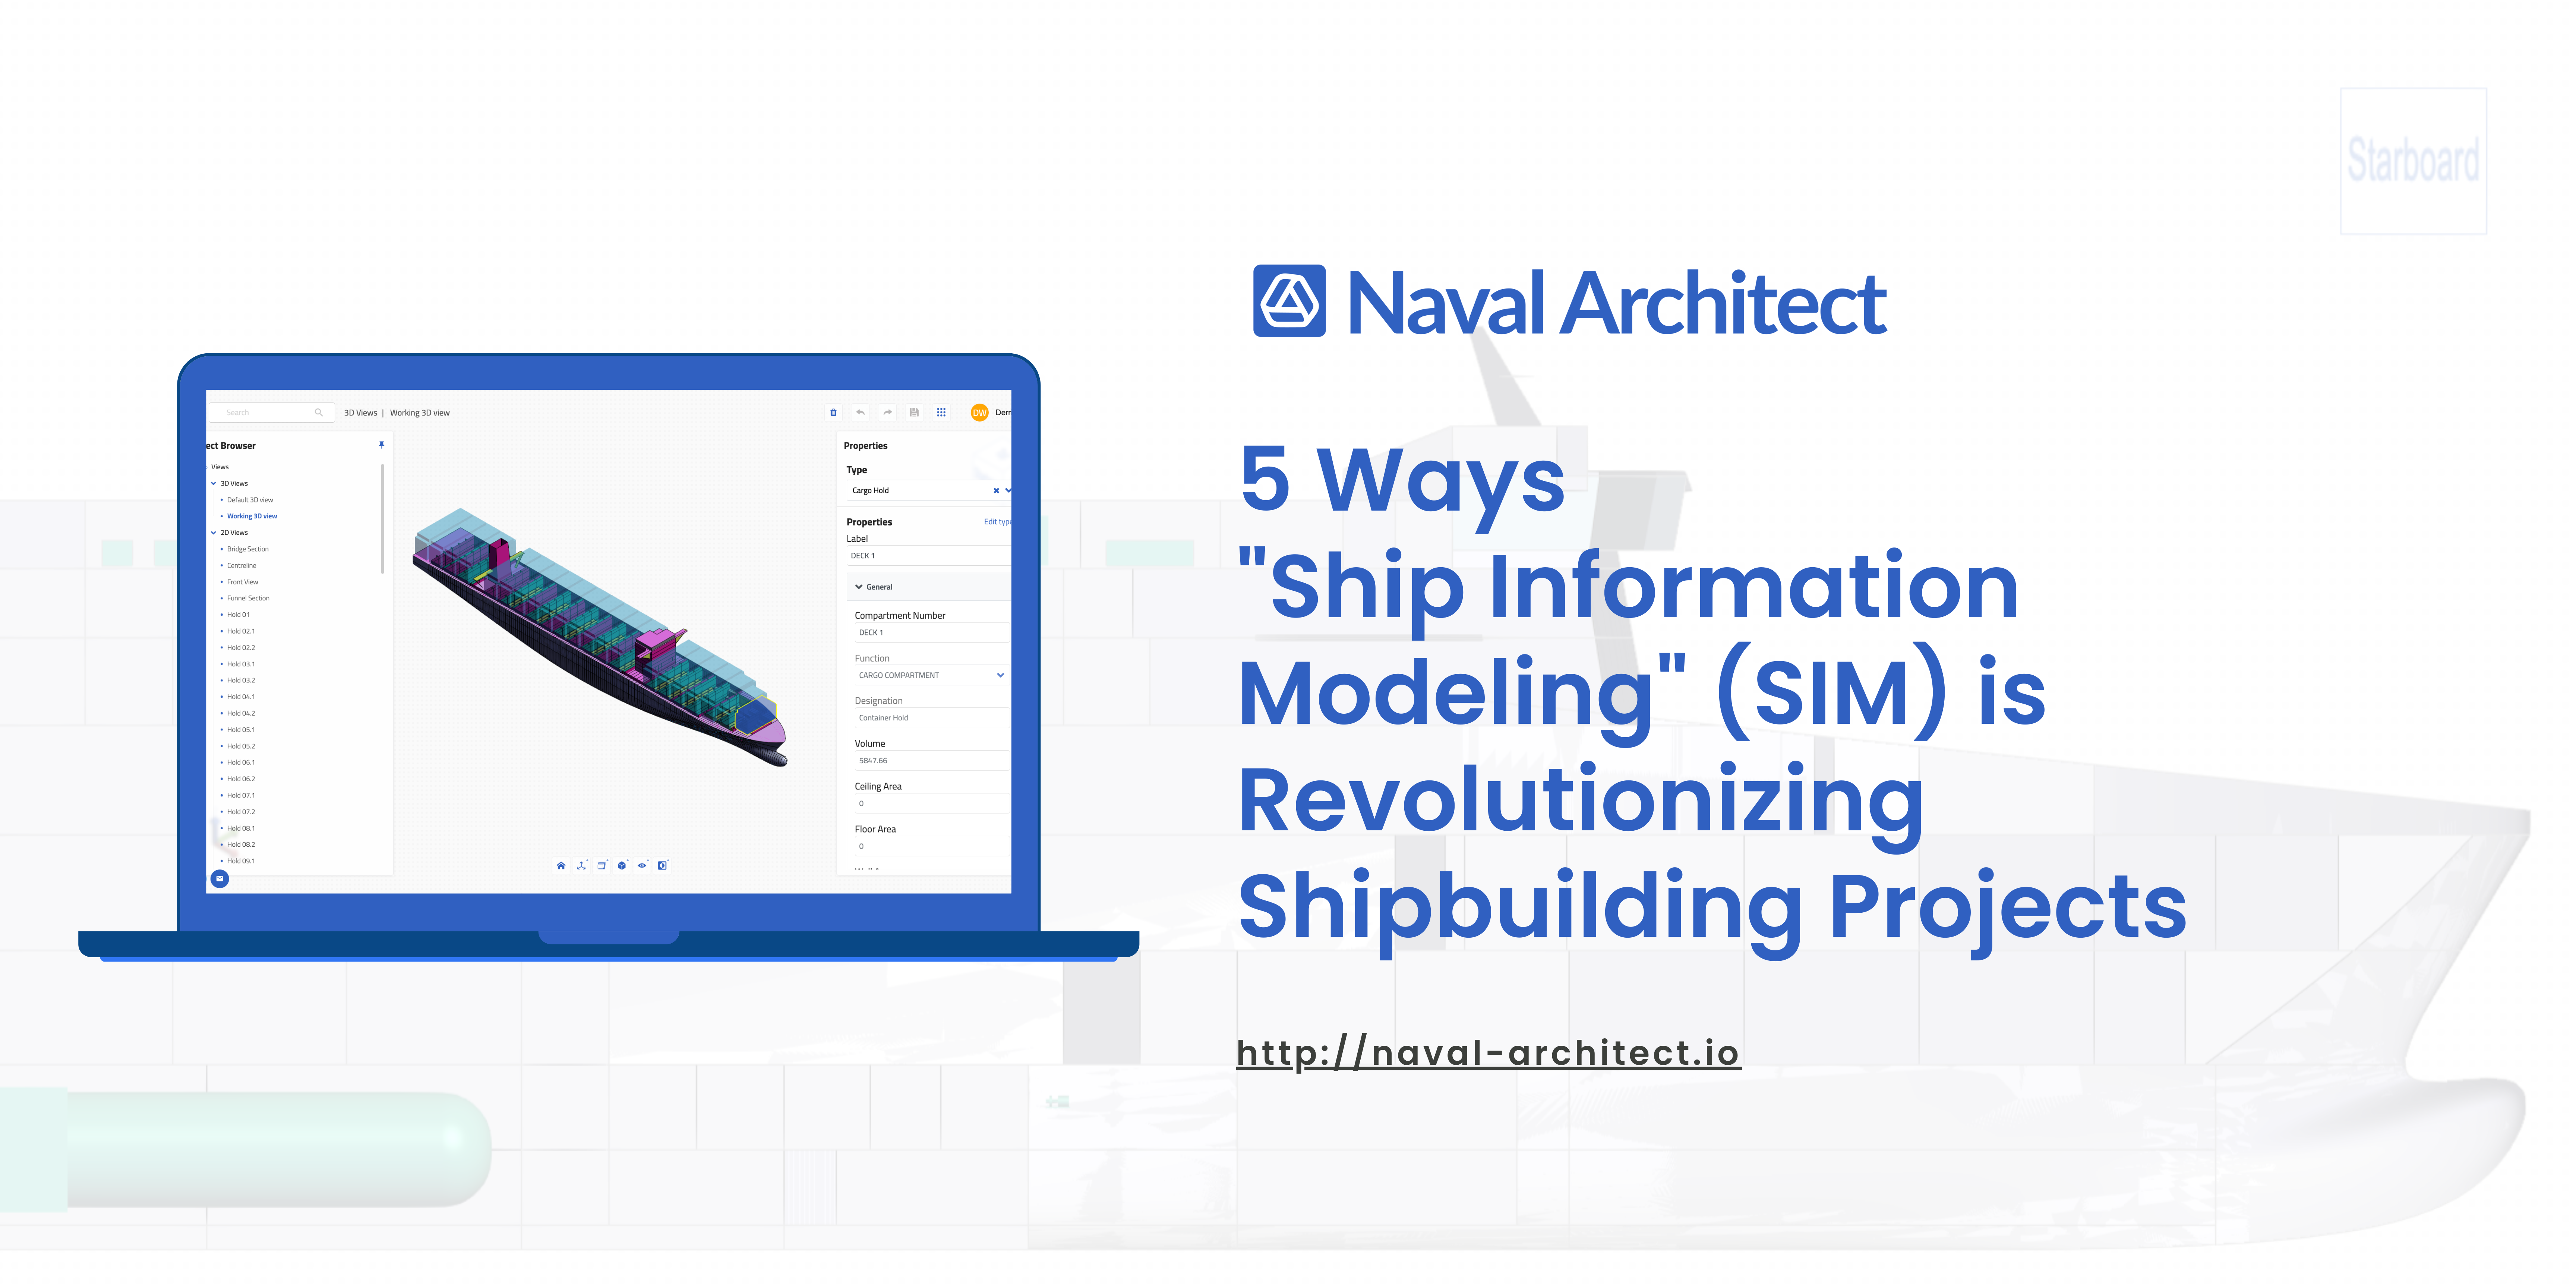 5 Ways Ship Information Modeling (SIM) is Revolutionizing Shipbuilding Projects